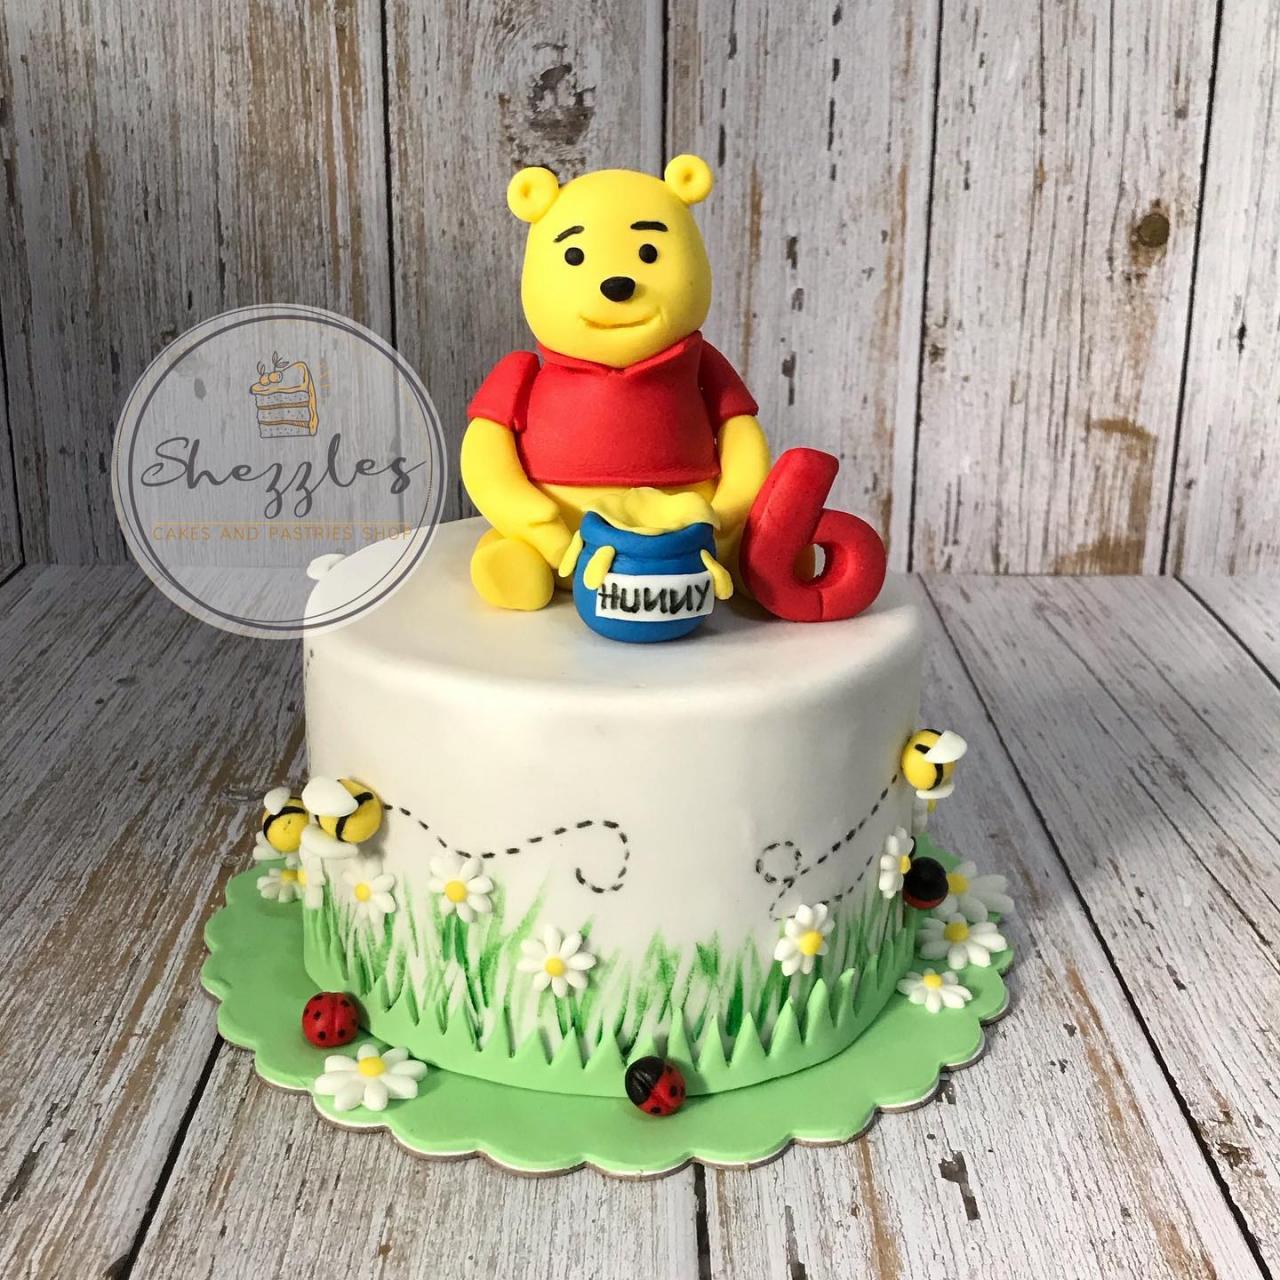 Winnie the pooh cake decorations